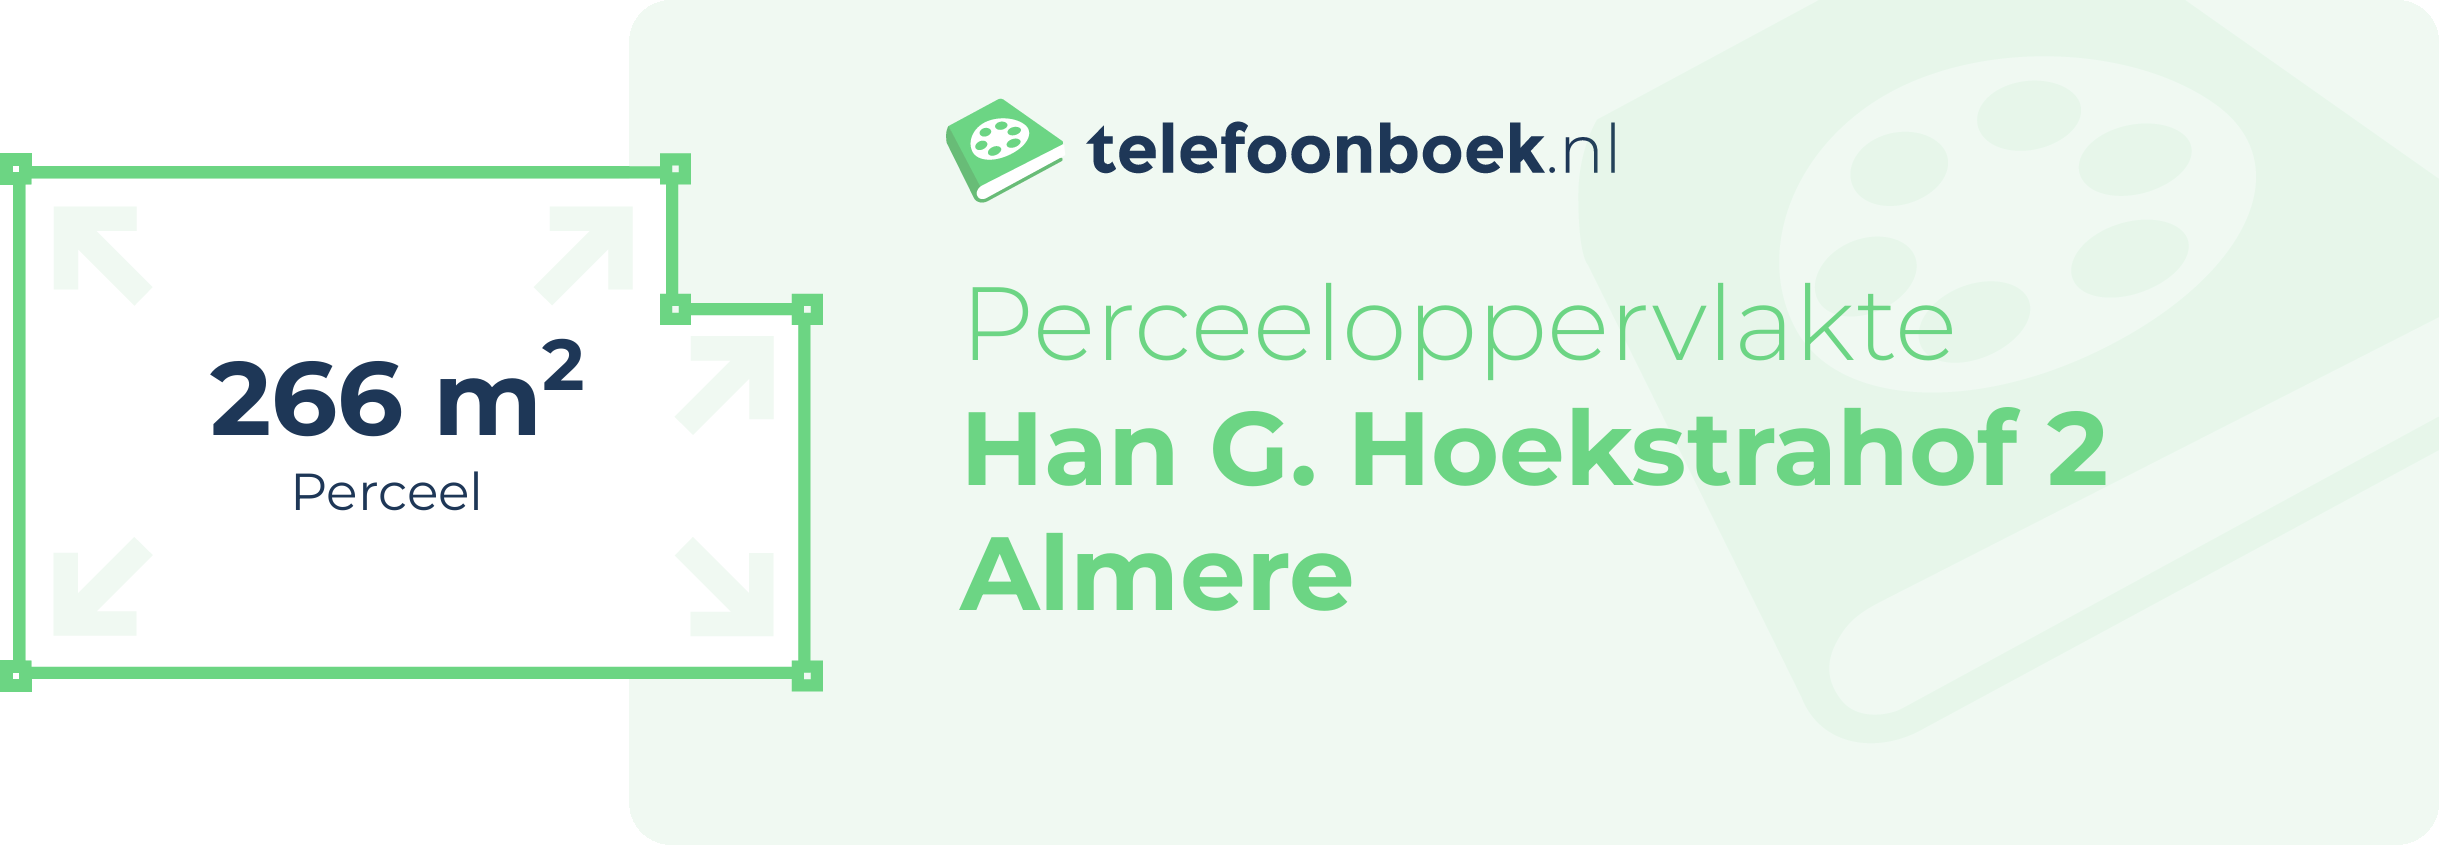 Perceeloppervlakte Han G. Hoekstrahof 2 Almere